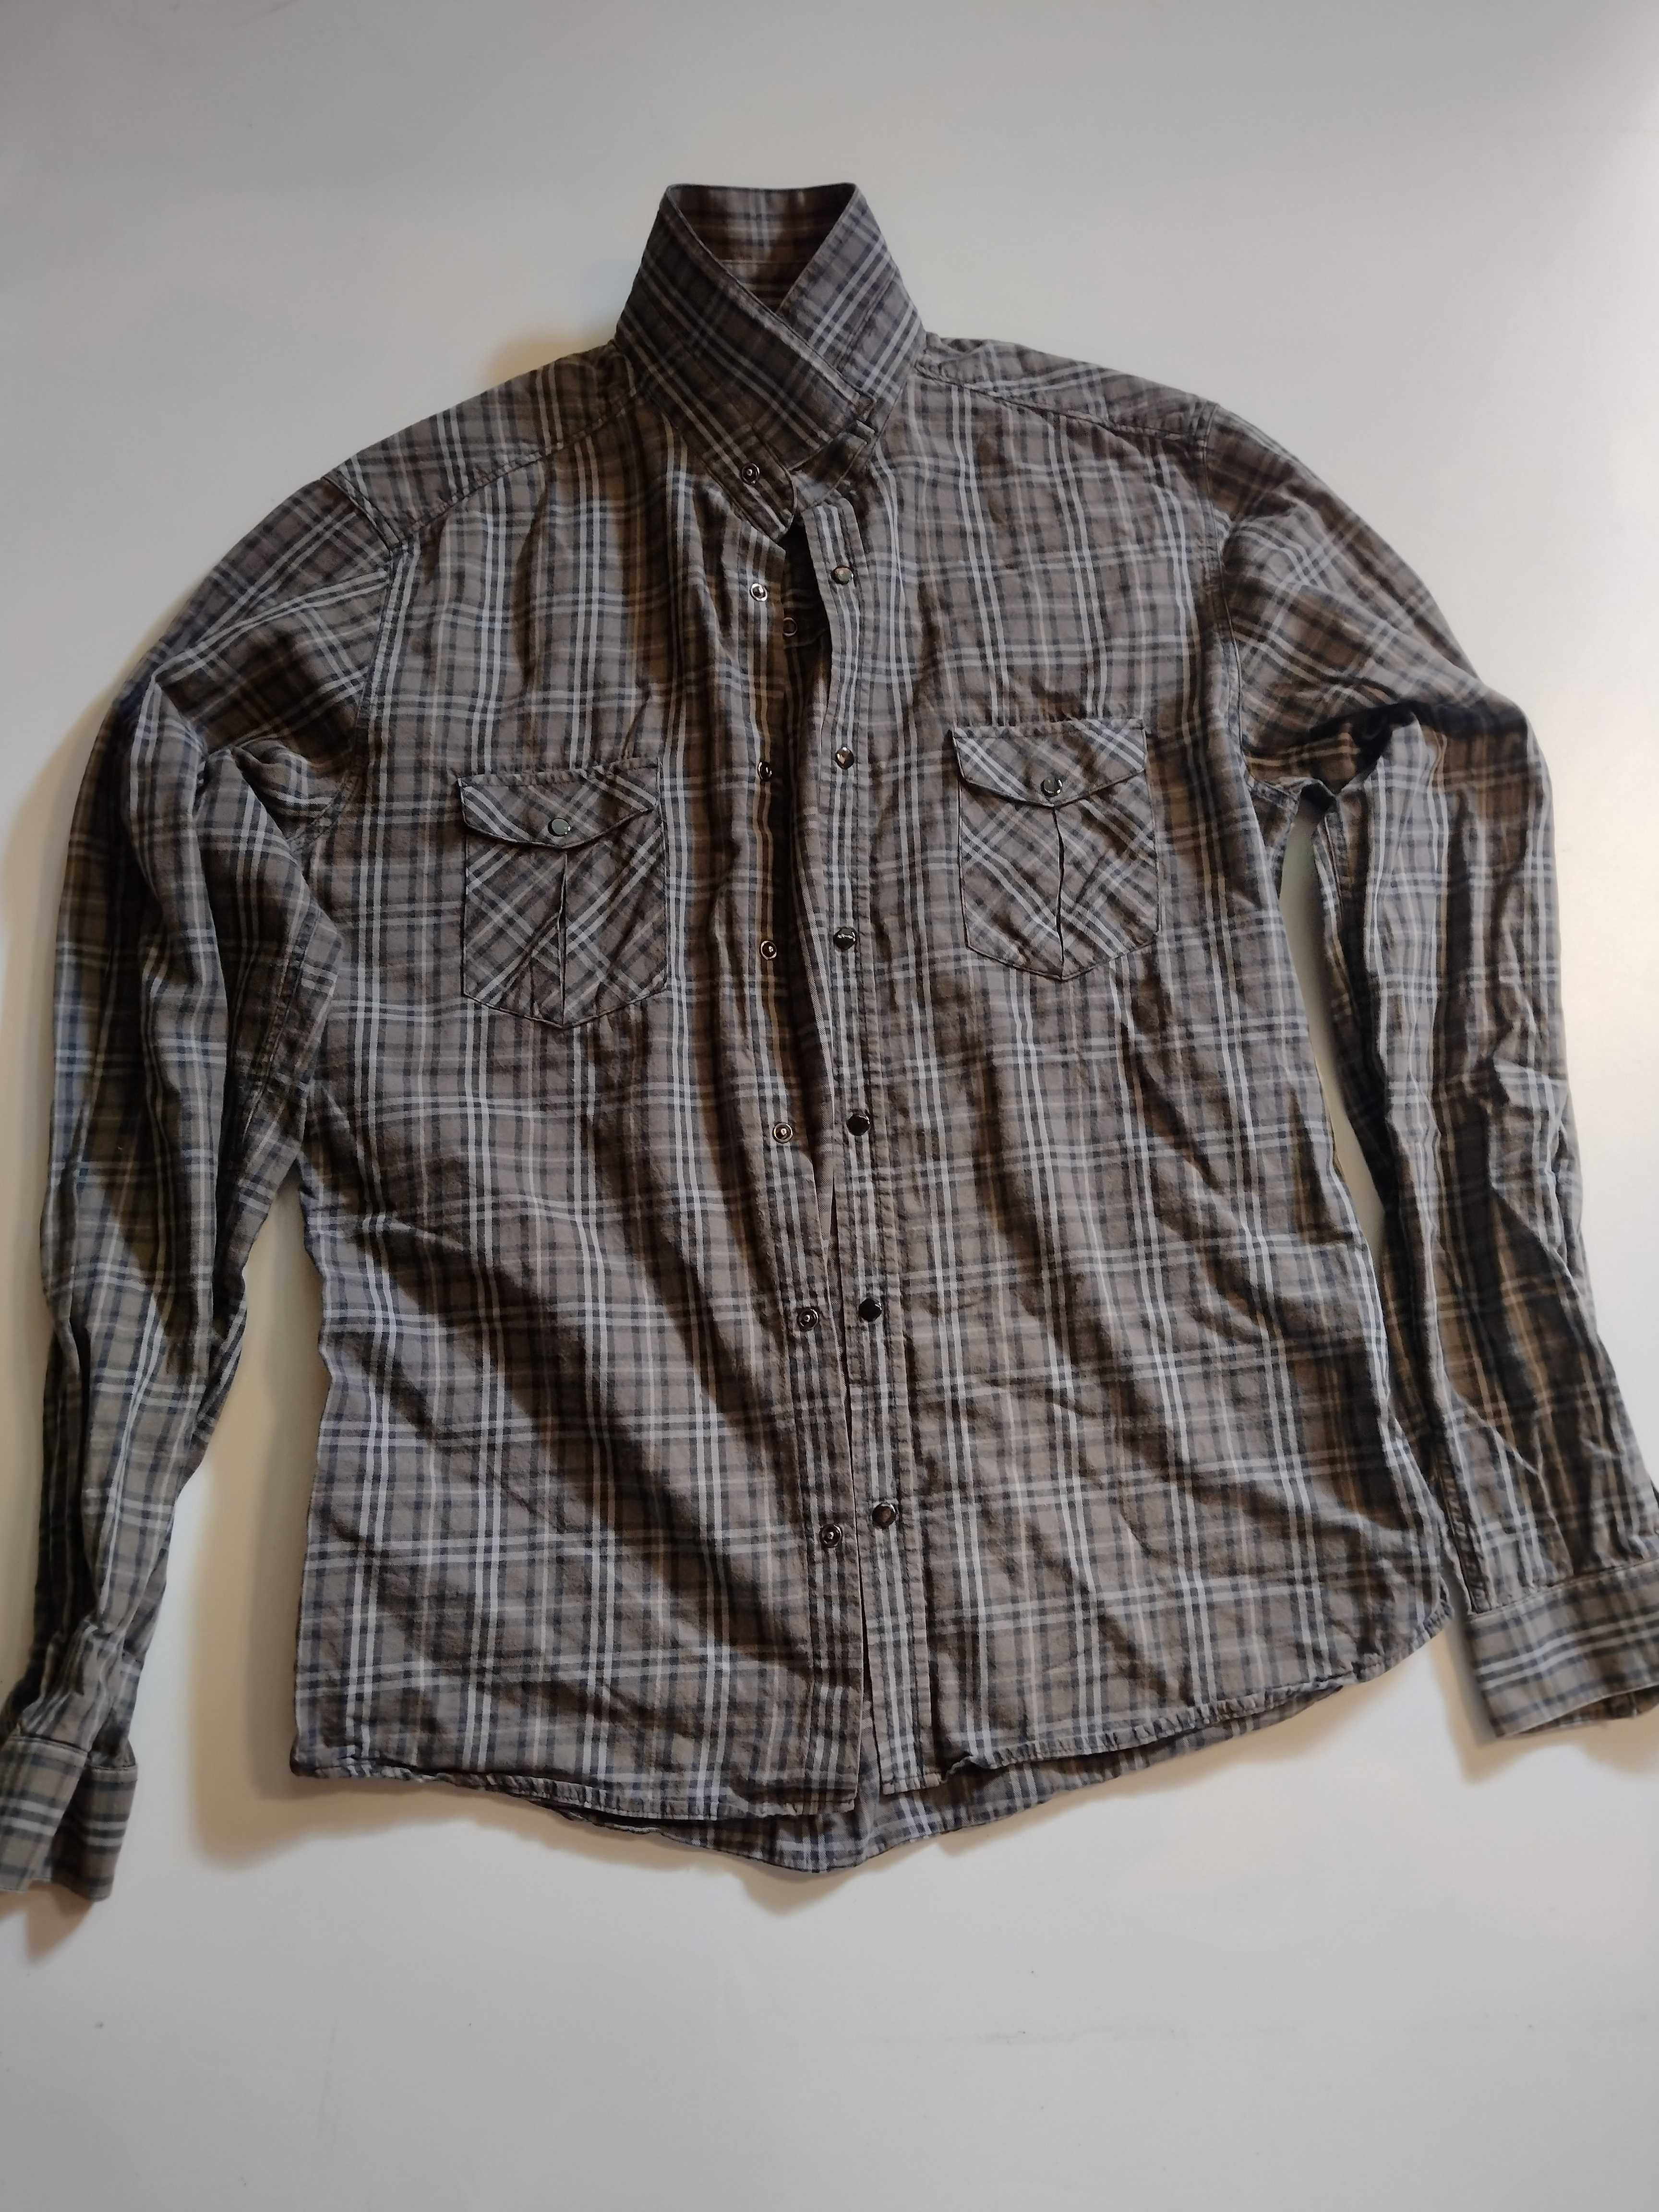 zestaw meski; M/172 spodnie Jack Jones /koszula krata/ koszulka czarna